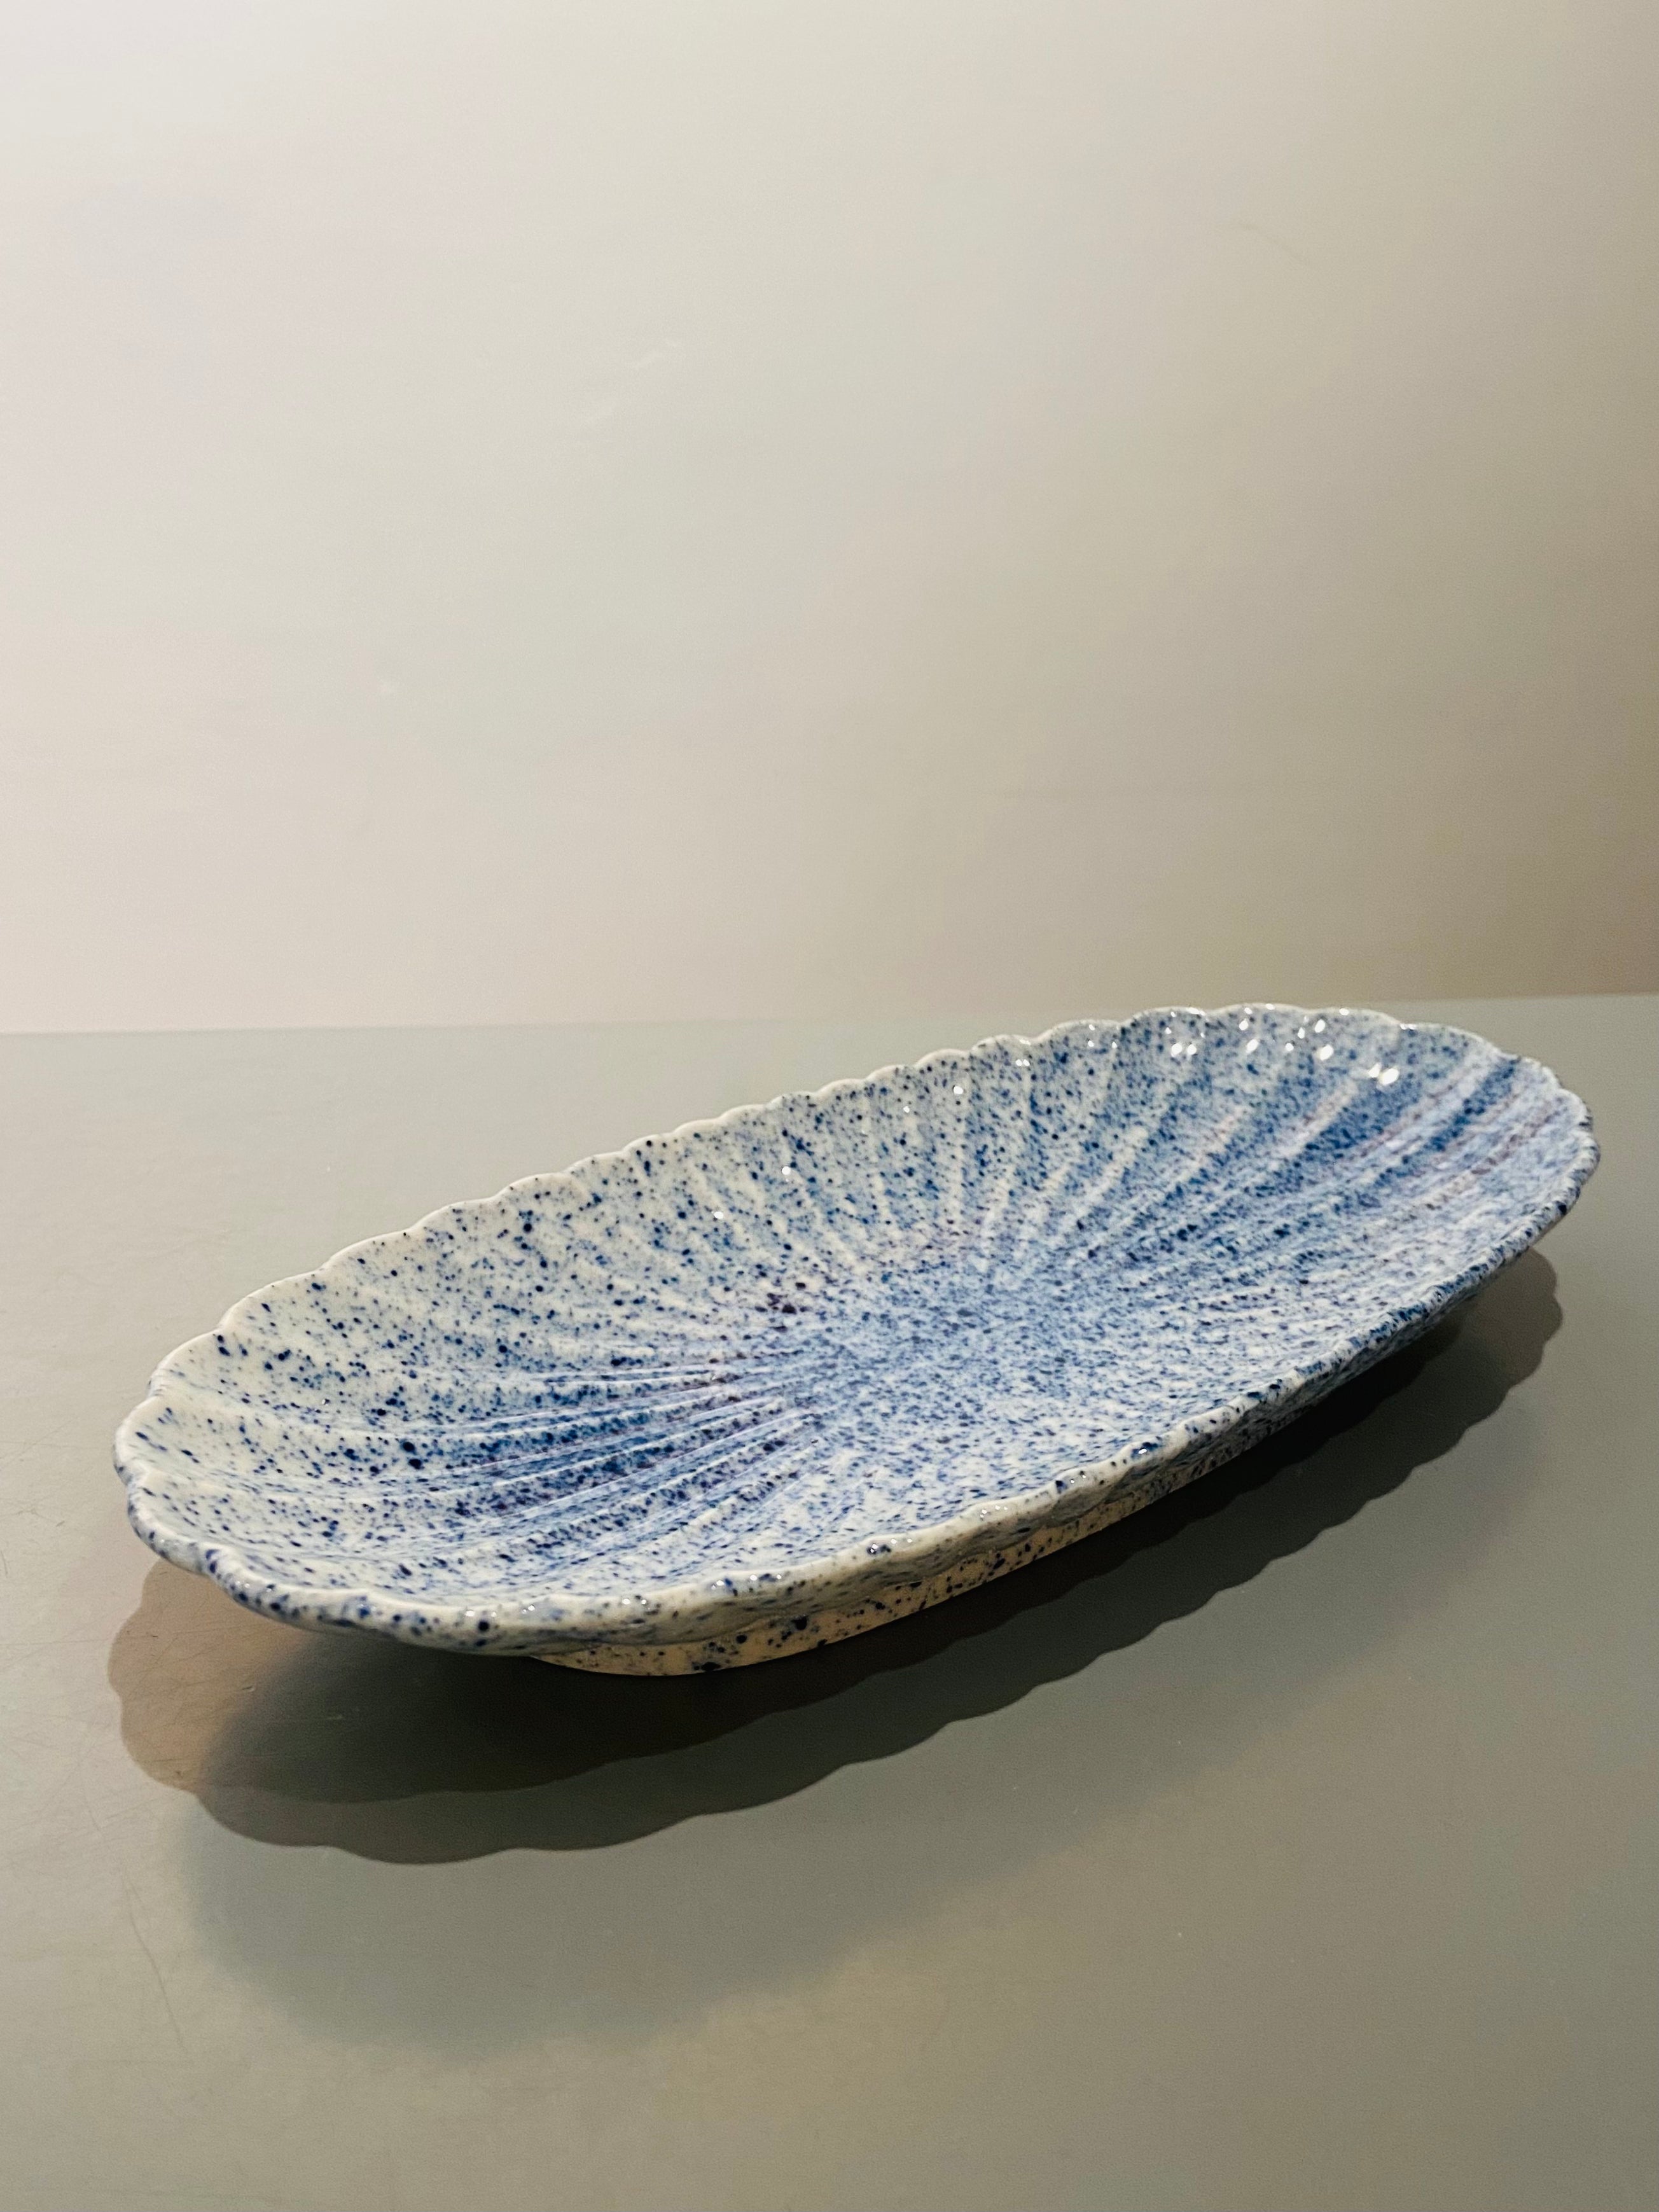 Oval flower dish with blue splash